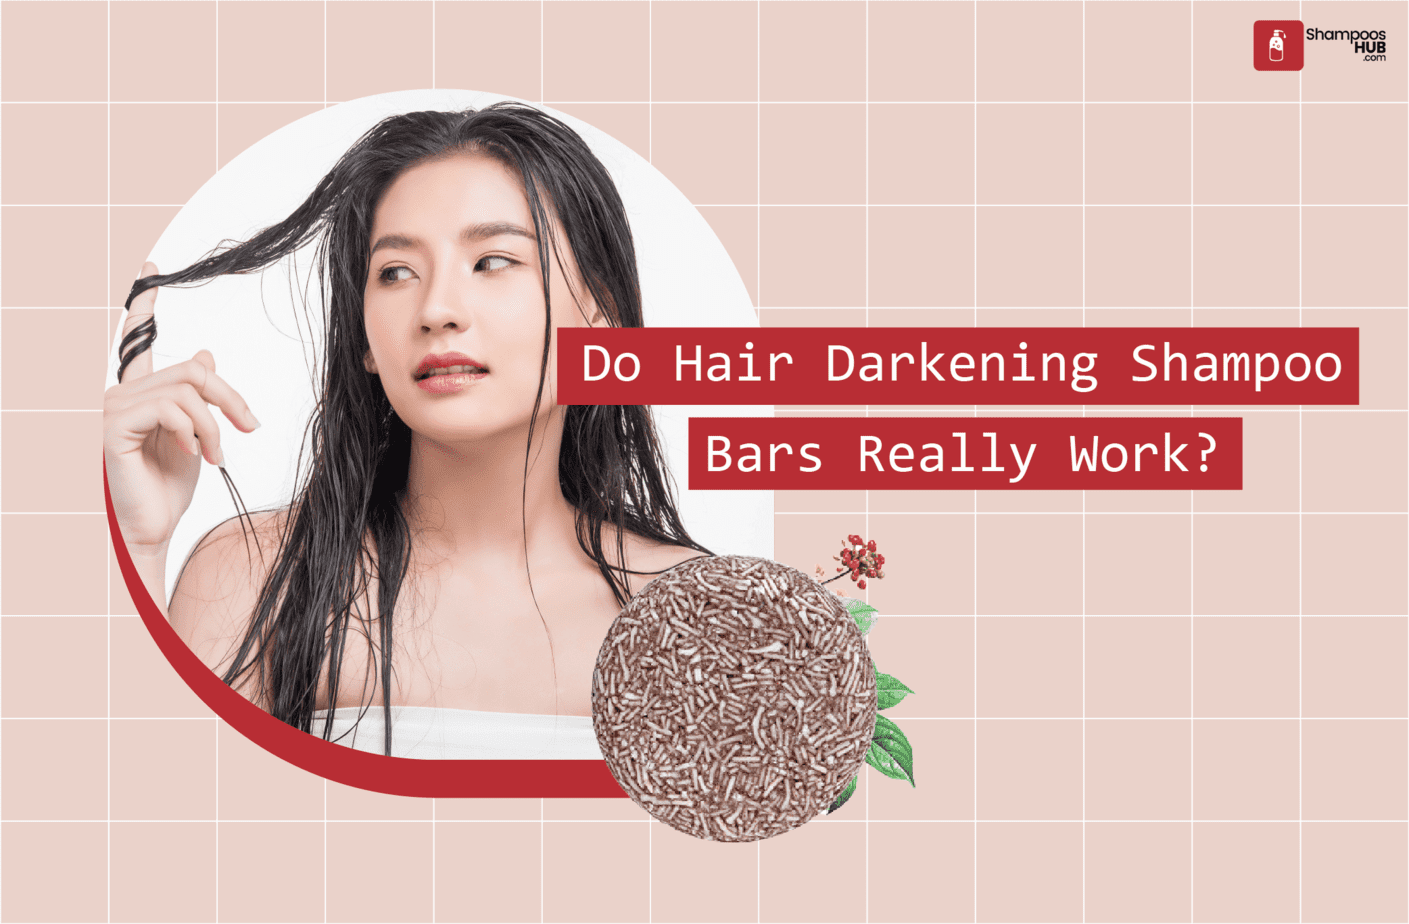 Do Hair Darkening Shampoo Bars Really Work?